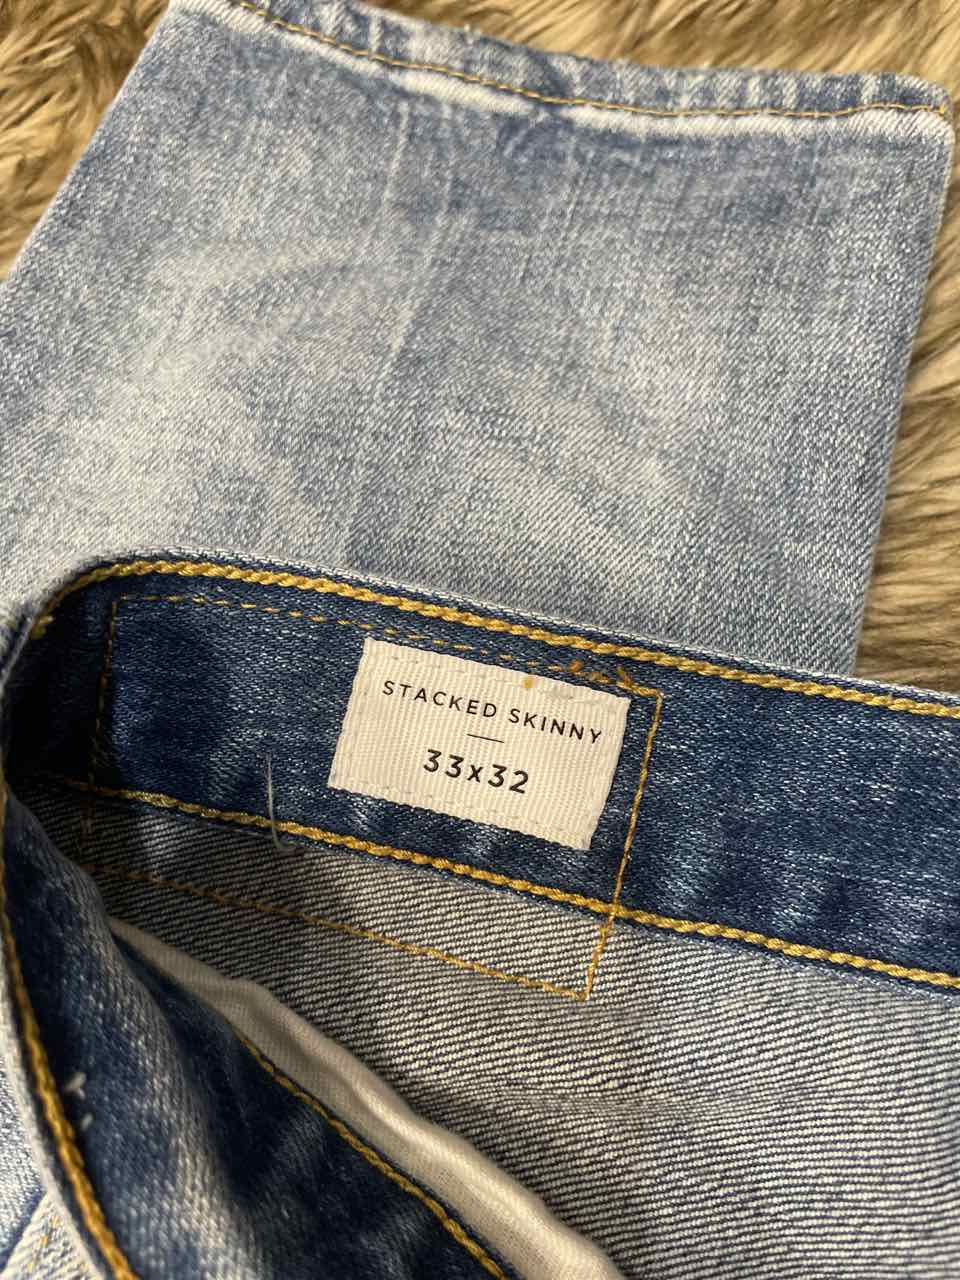 33/32 - Pac Sun Jeans